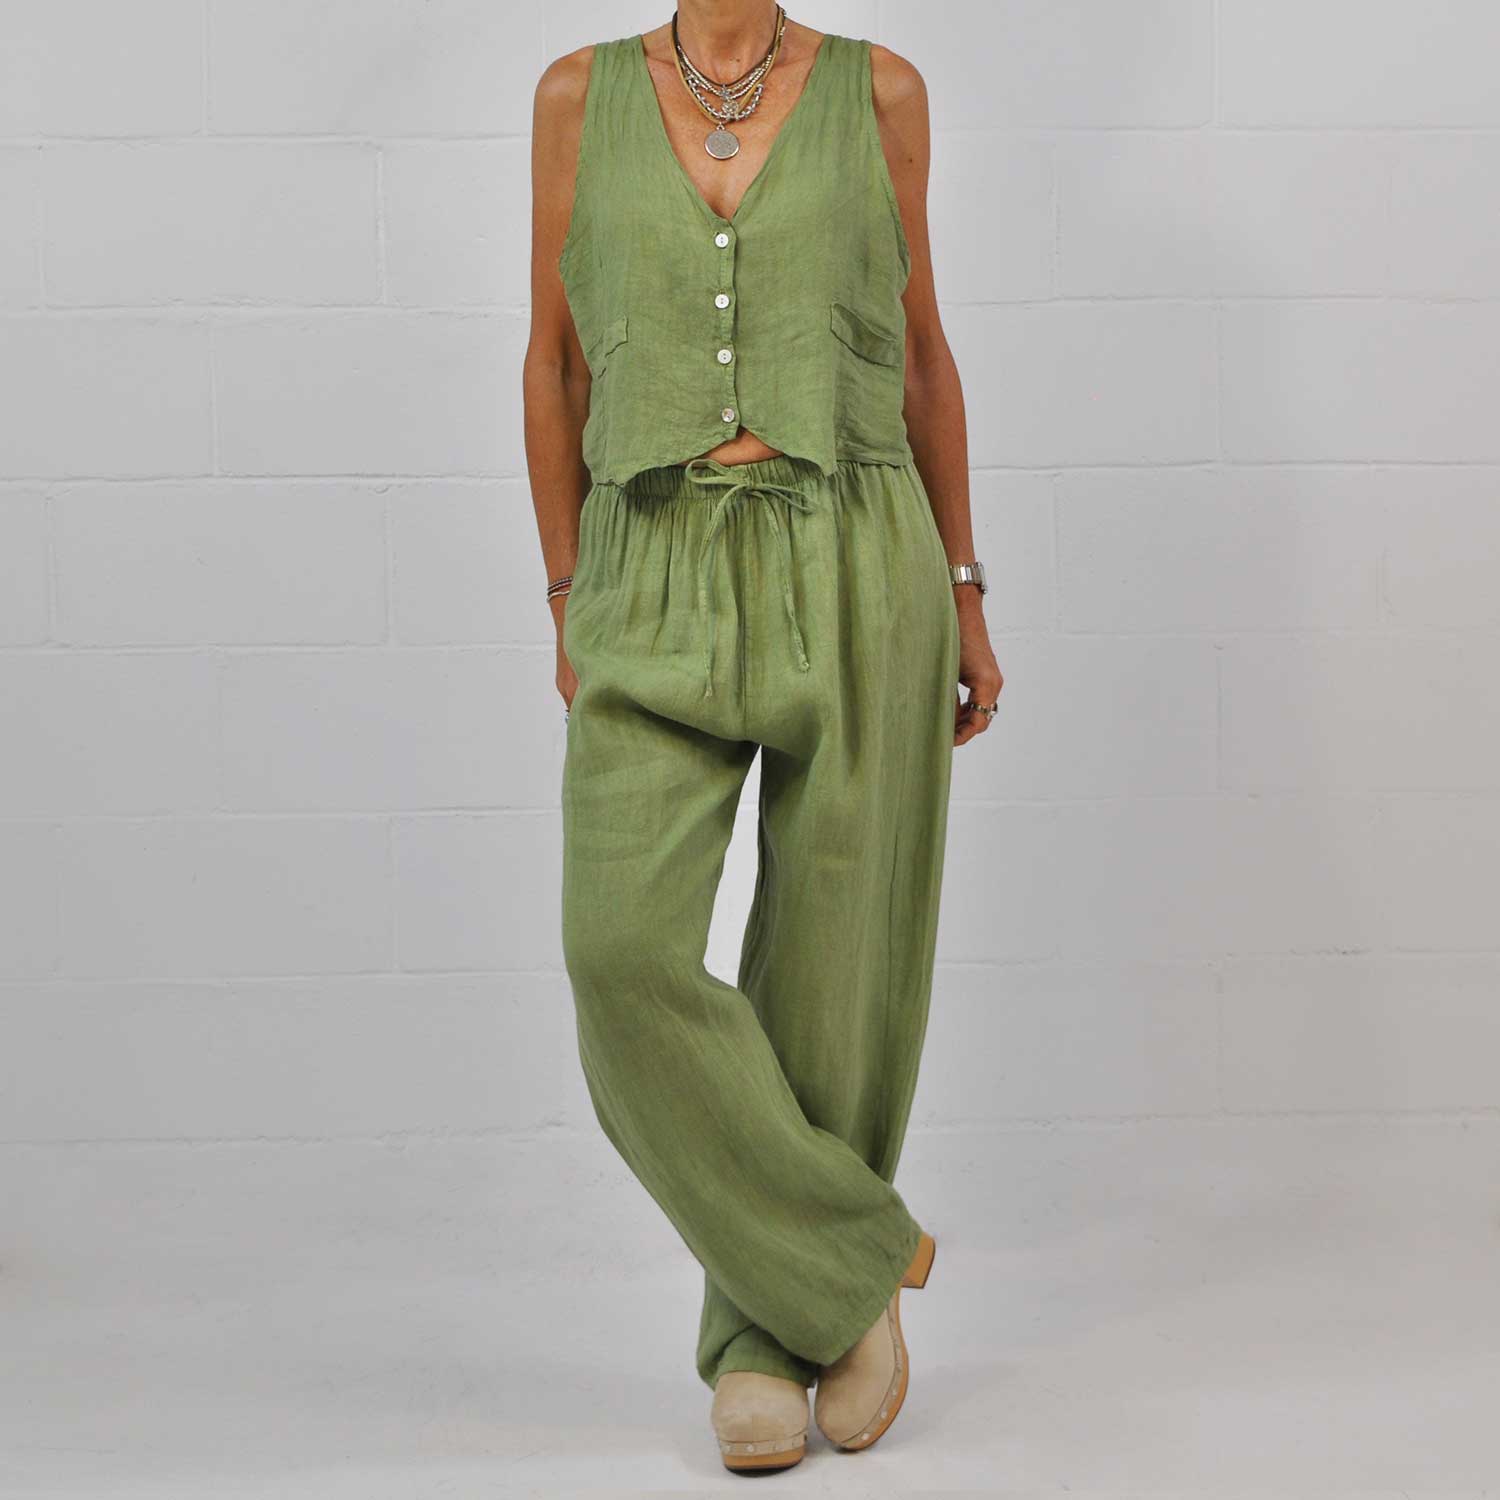 Green wide linen pants